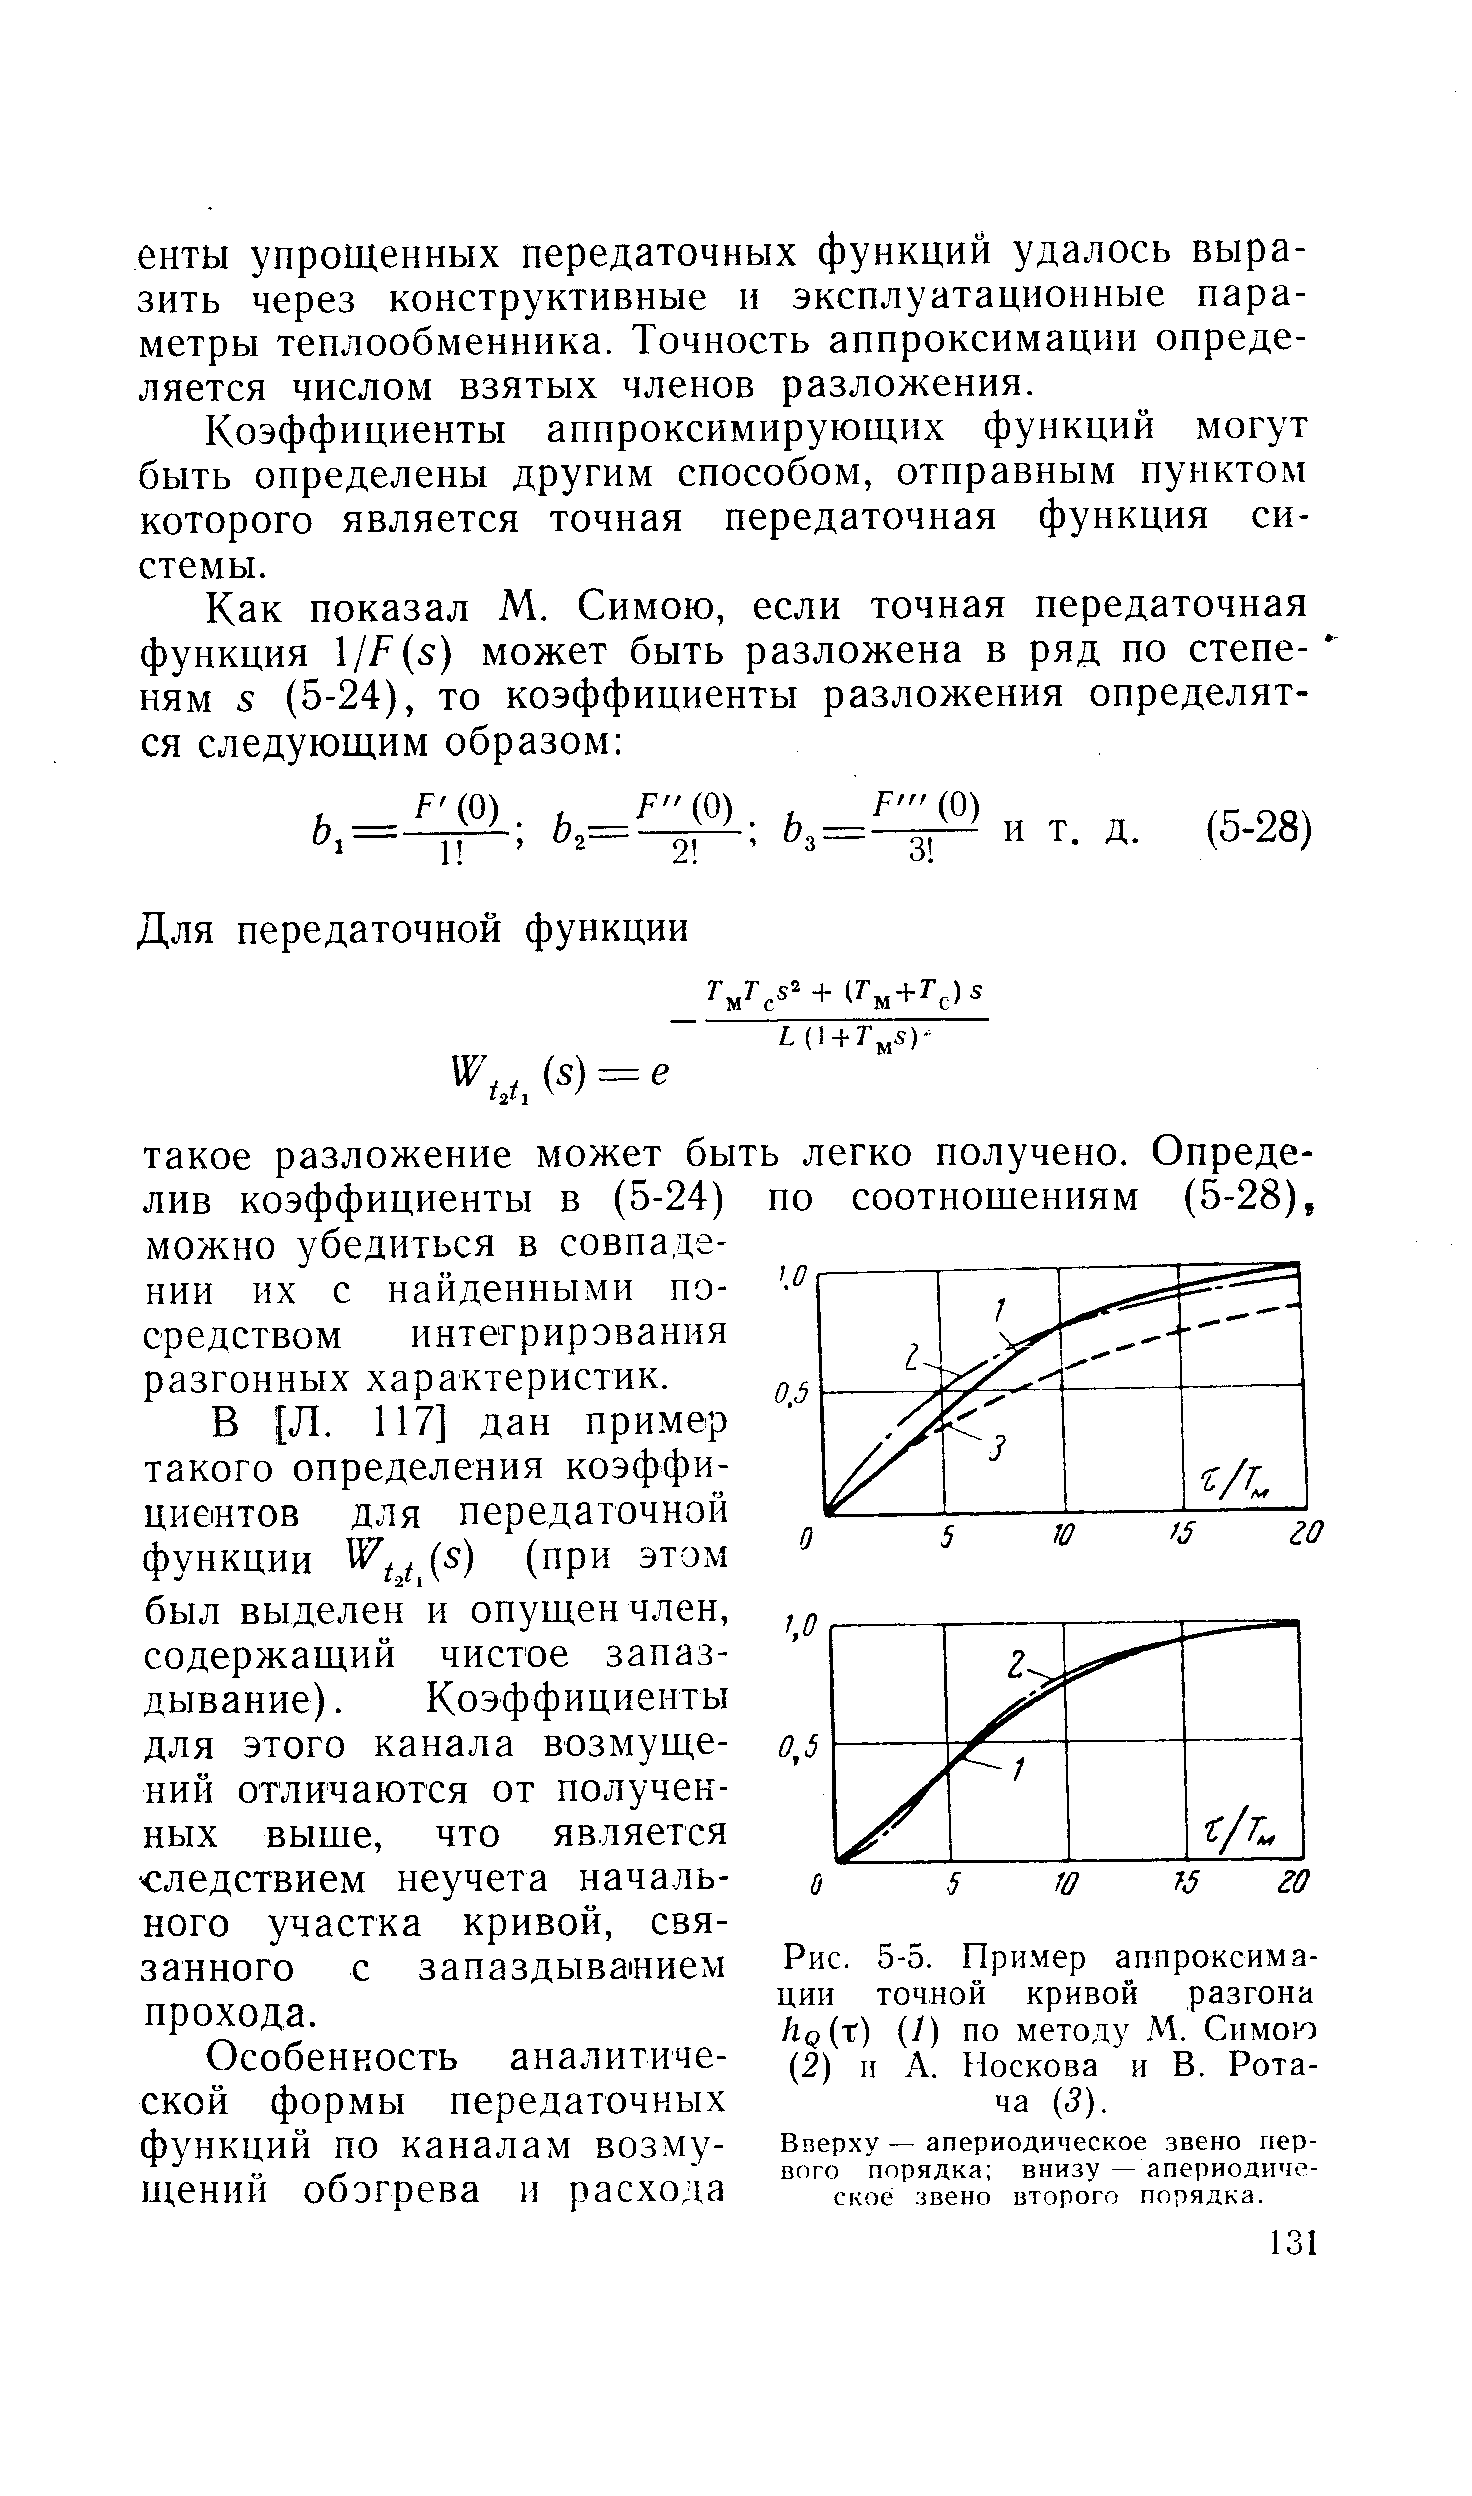 Рис. 5-5. Пример аппроксимации точной кривой разгона Л(г(т) (У) по методу М. Симою (2) и А. Носкова и В. Рота-ча (5).
